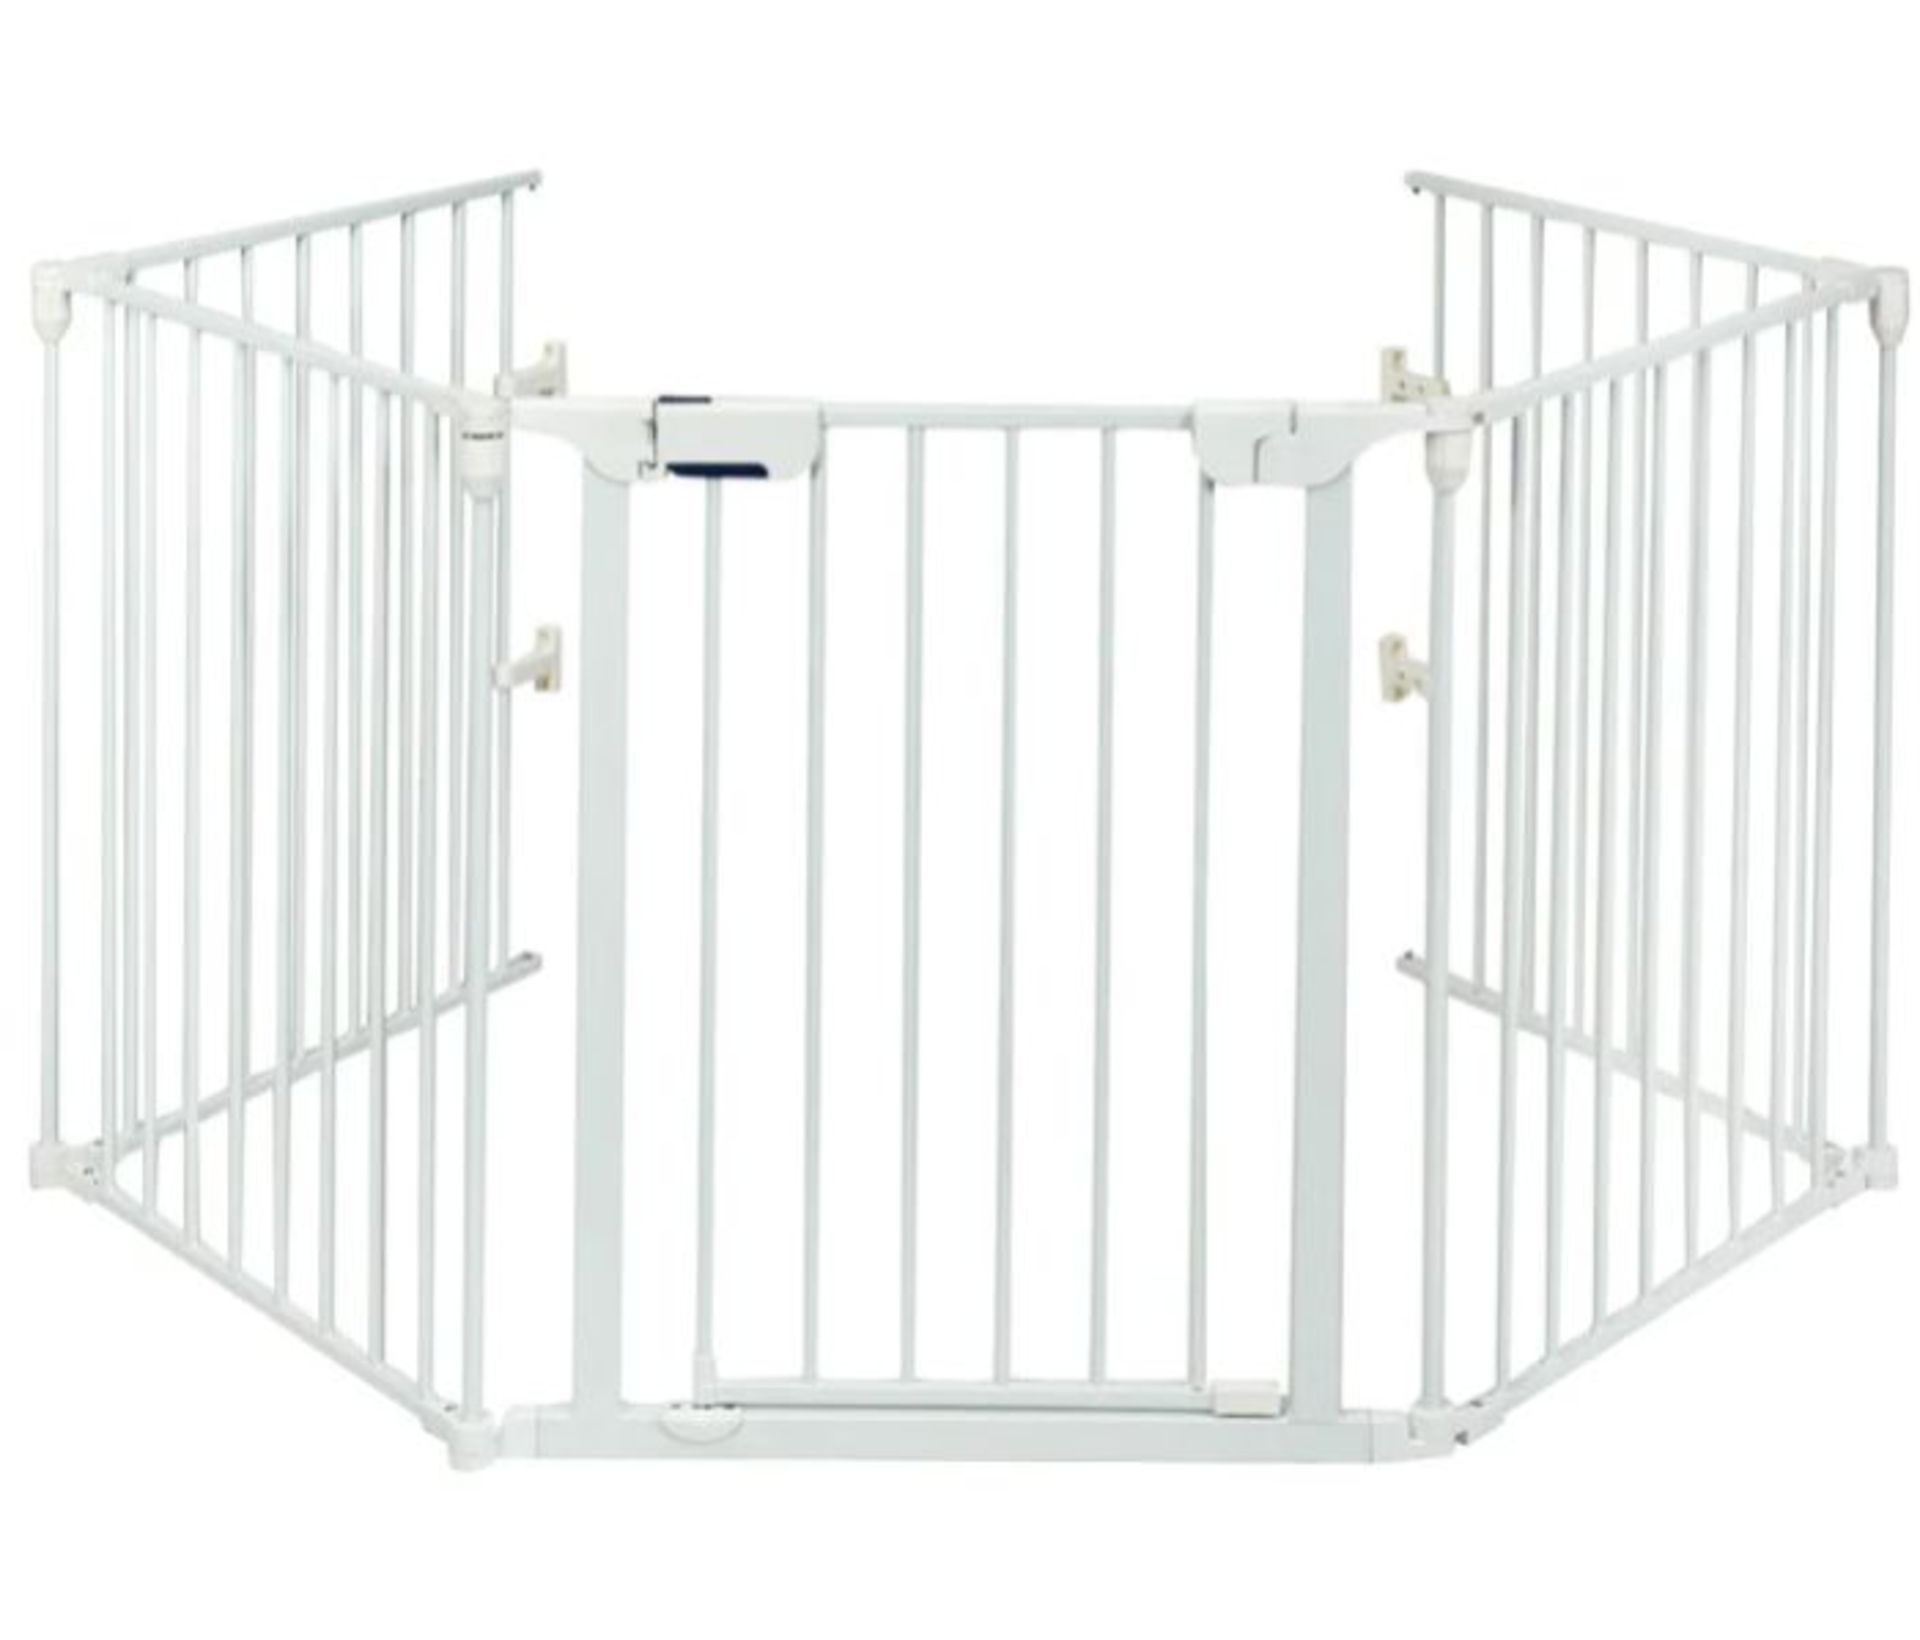 5 PANEL BABY SAFETY PLAYPEN FIREPLACE BARRIER GATE ROOM DIVIDER-WHITE. - ER53. Multifunctional